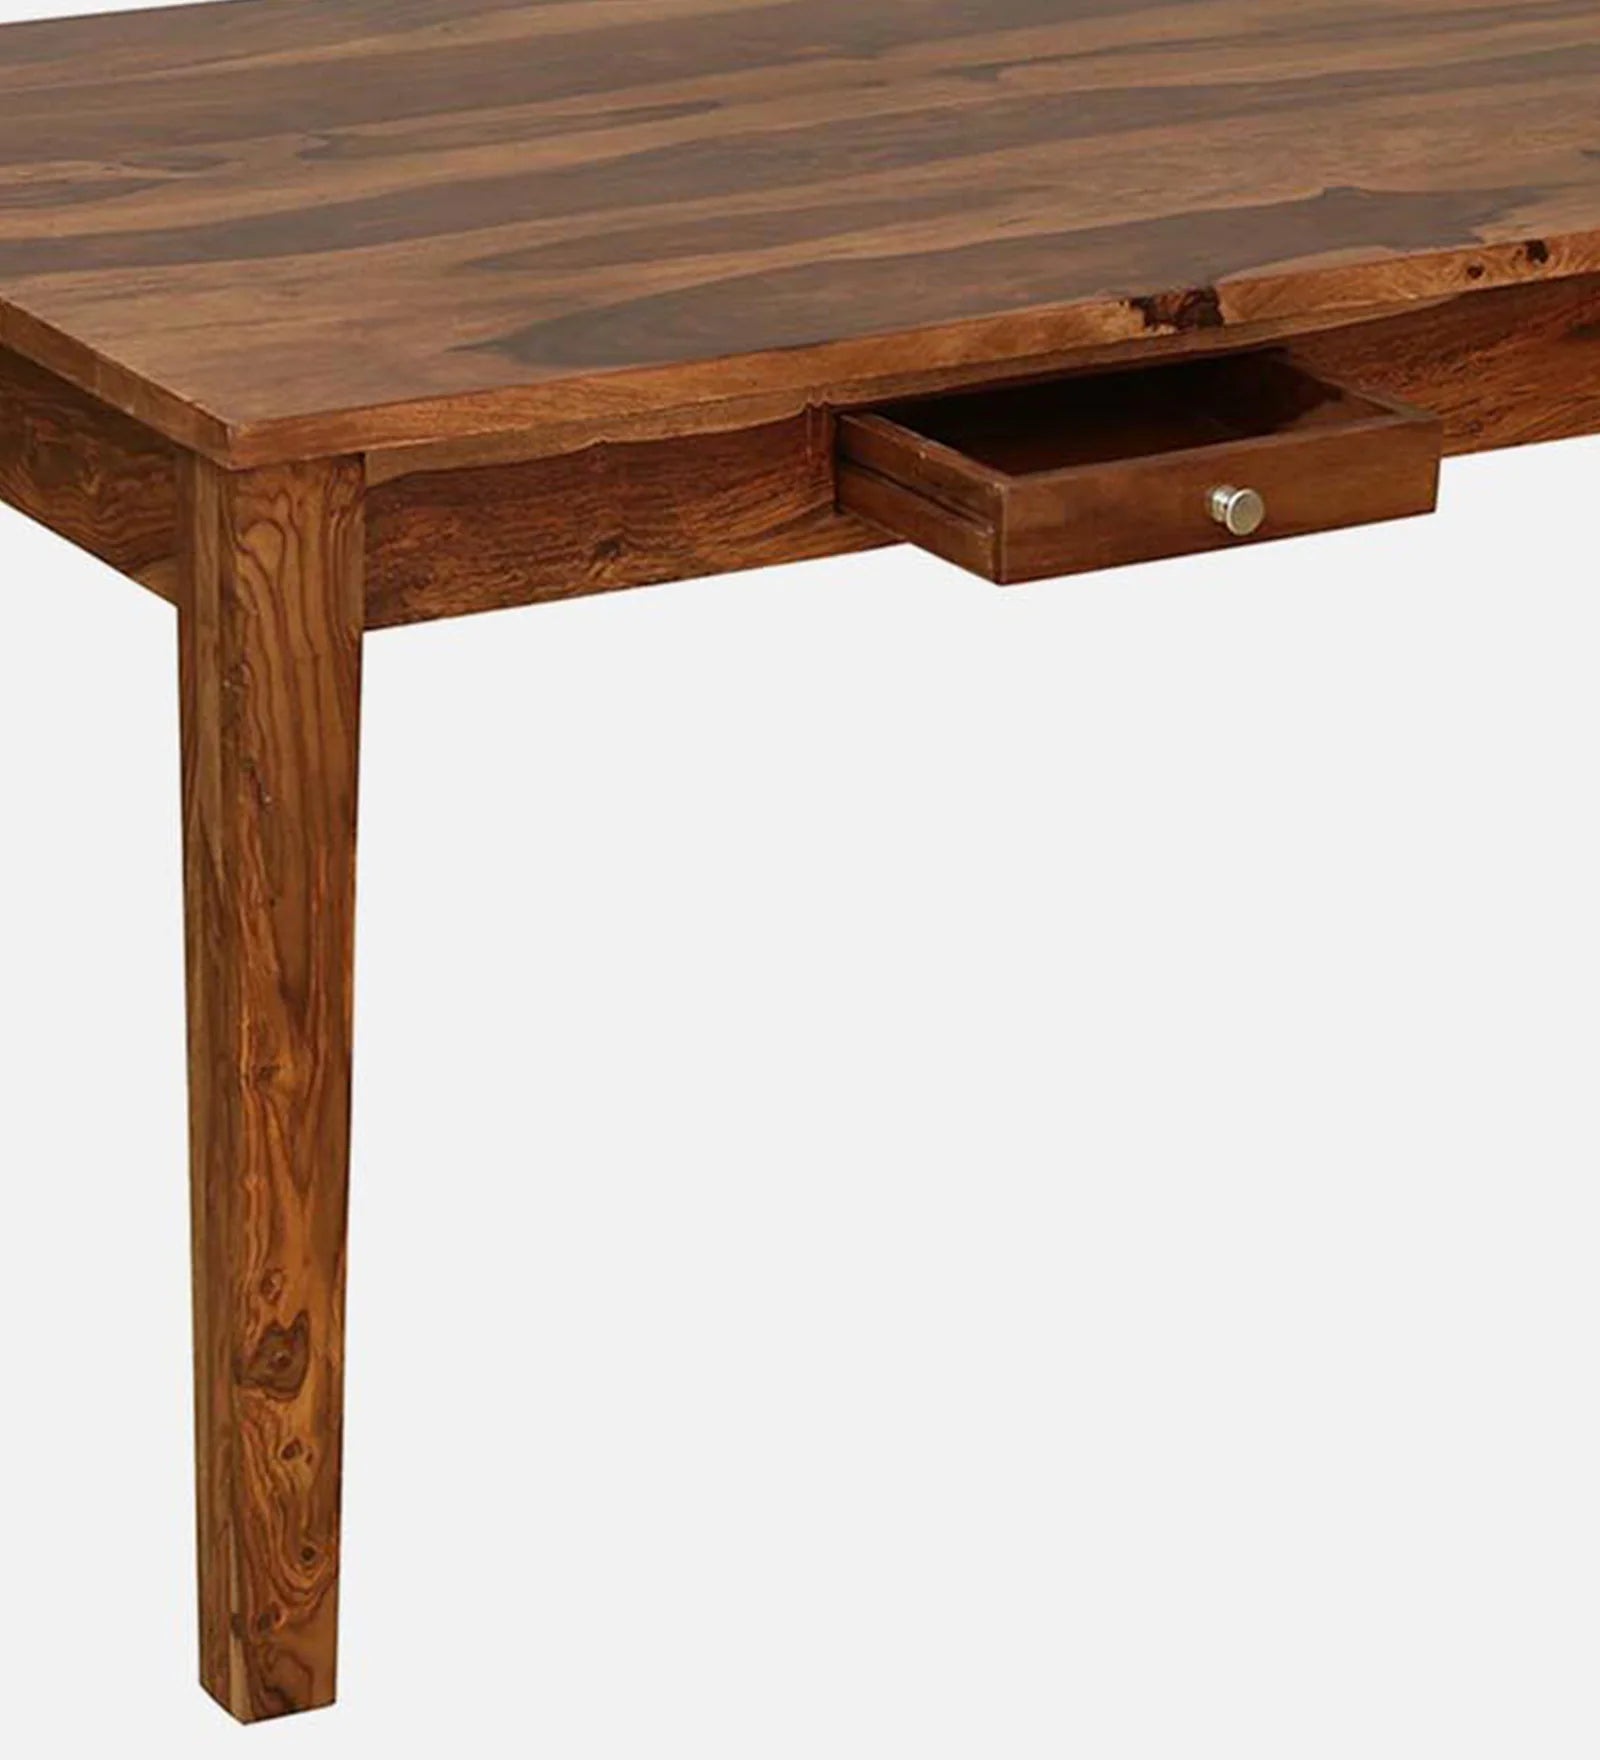 Oslo Solid Wood 6 Seater Dining Table In Rustic Teak Finish By Rajwada - Rajwada Furnish